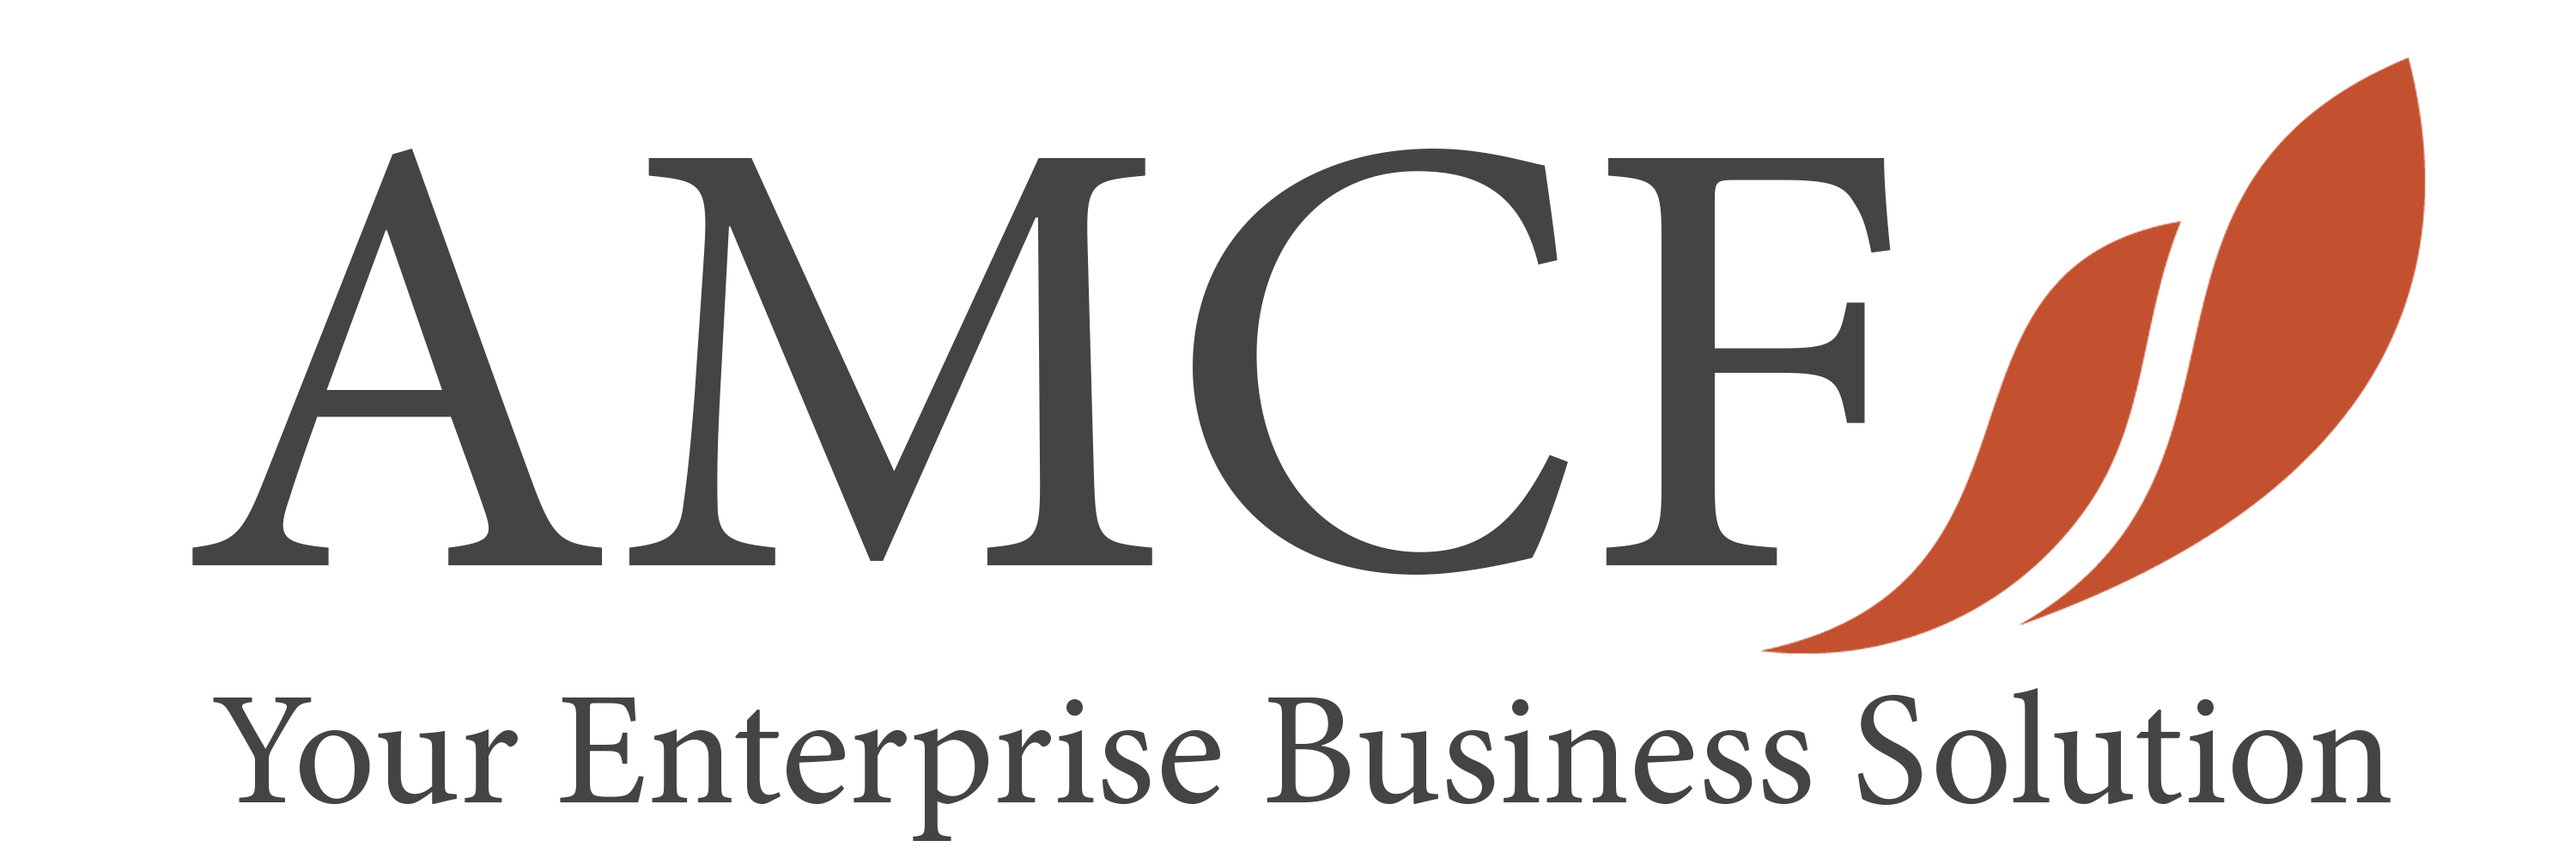 AMCF Logo Design